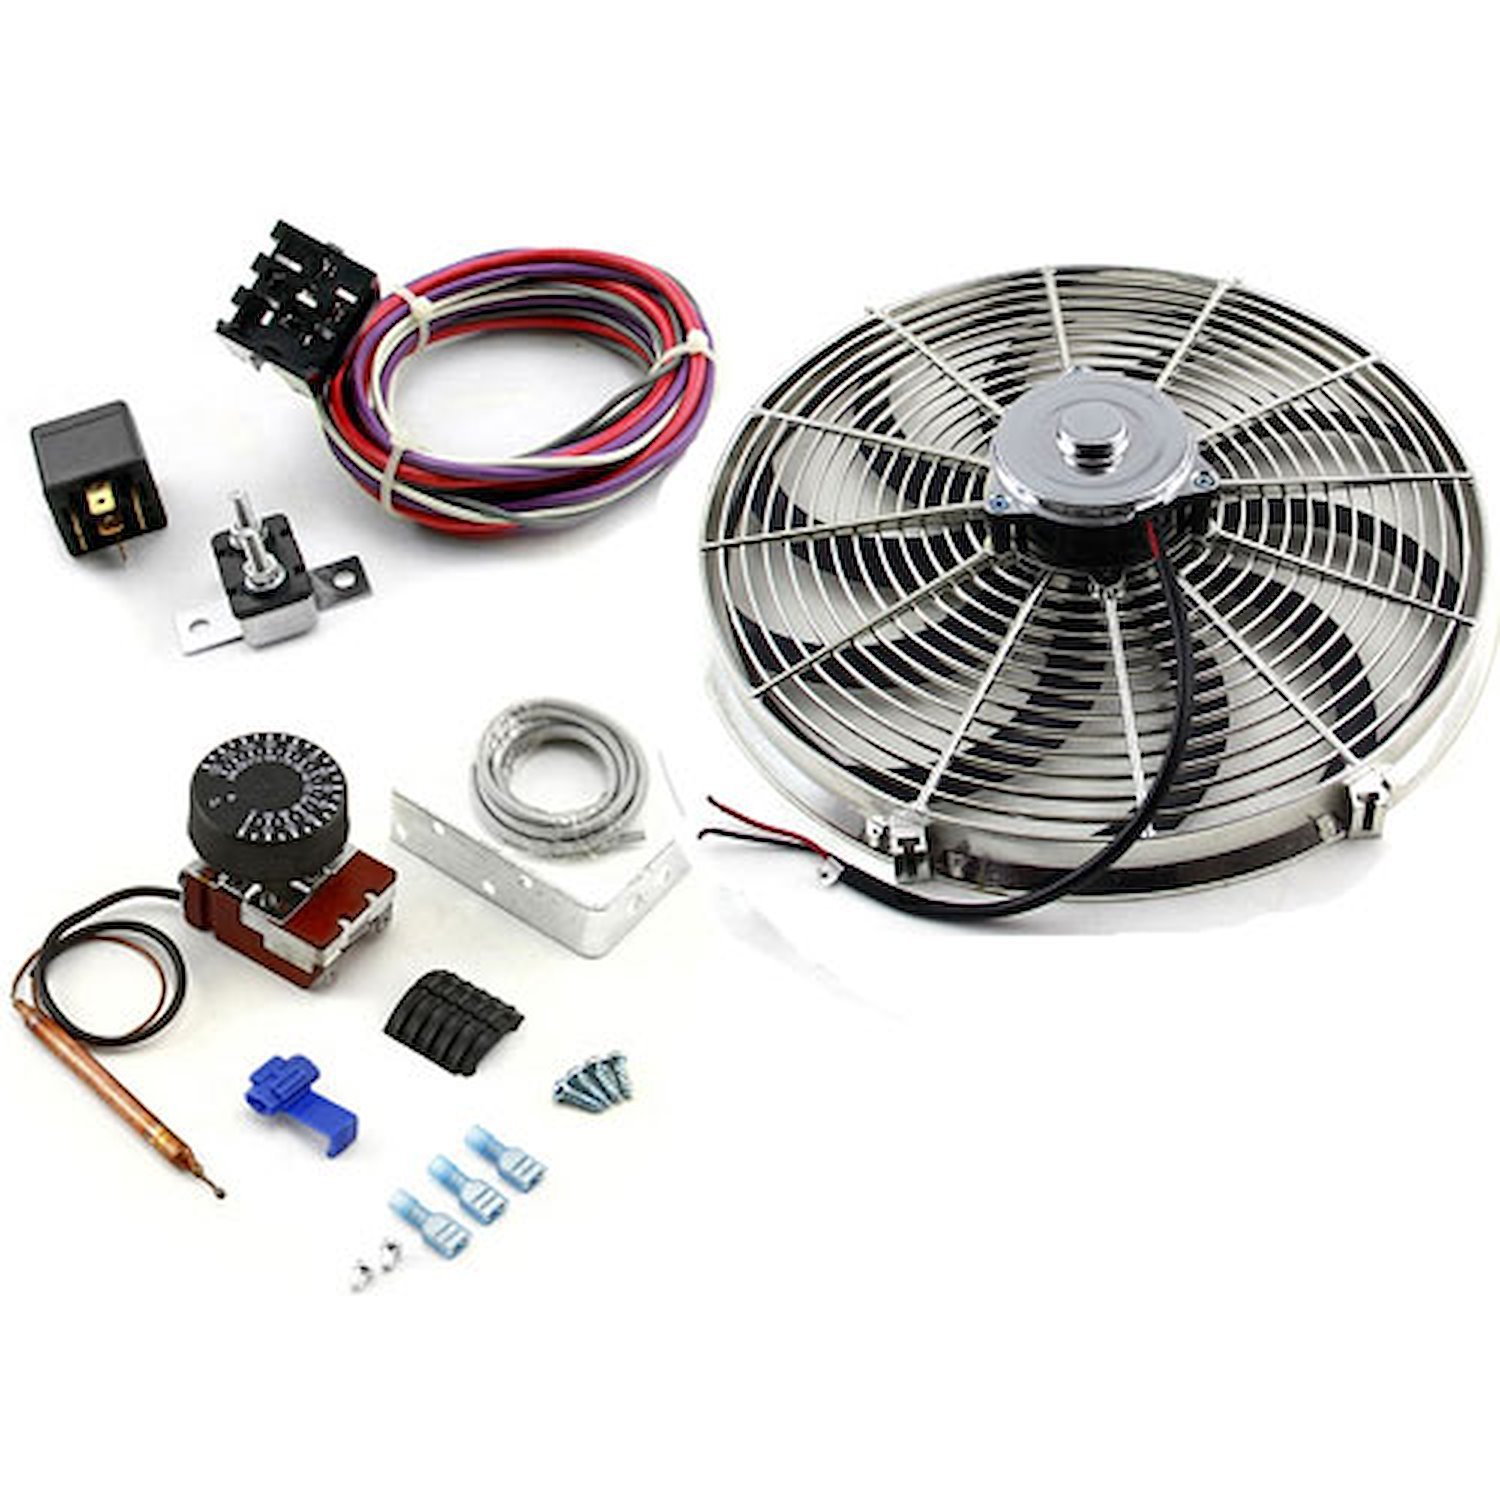 Electric Fan Kit 2330 CFM Includes: